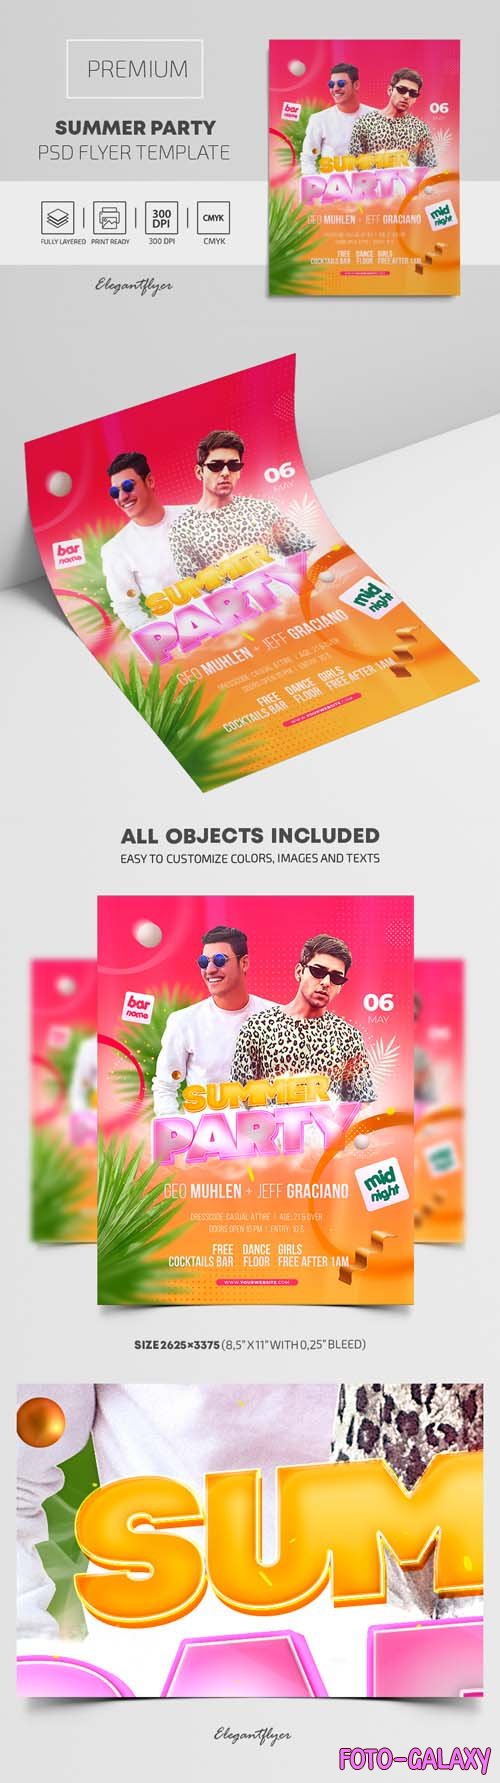 Summer Party Premium PSD Flyer Template